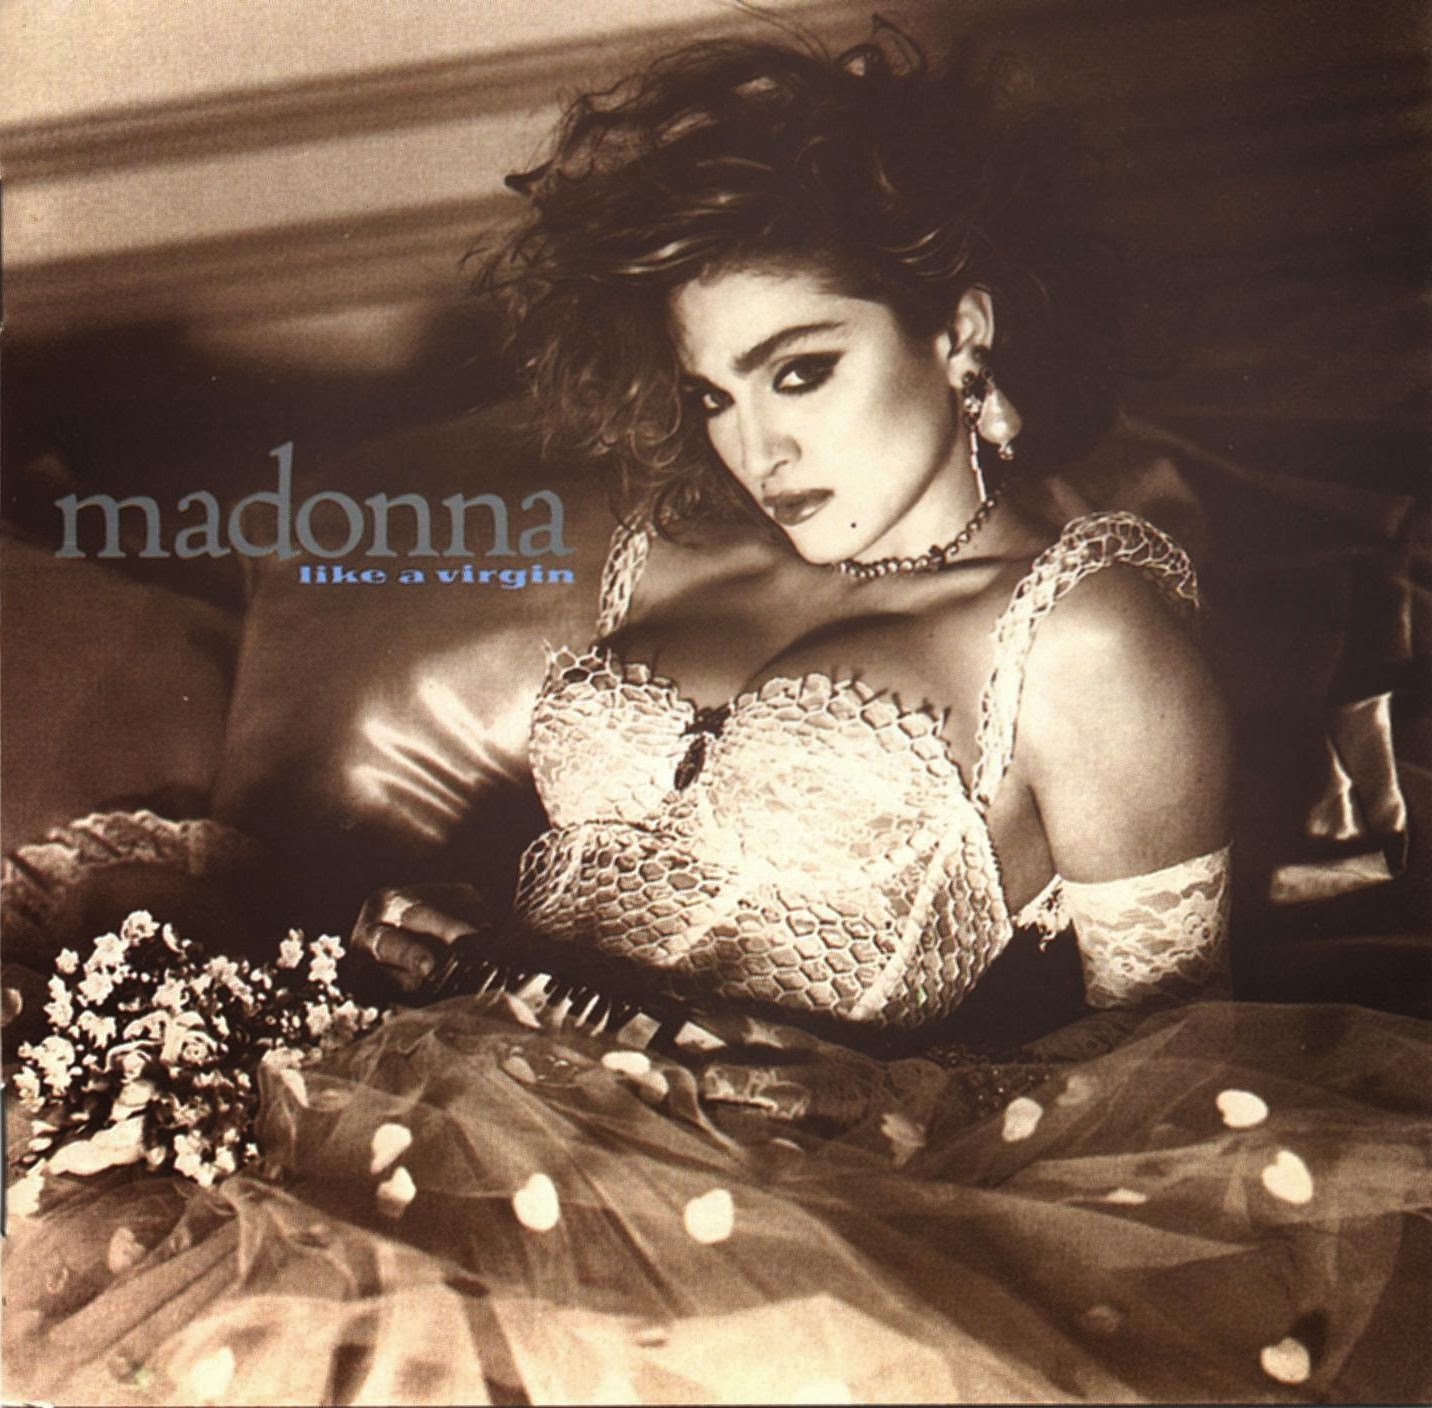 An Album A Day...: 12th November - Madonna's Like a Virgin